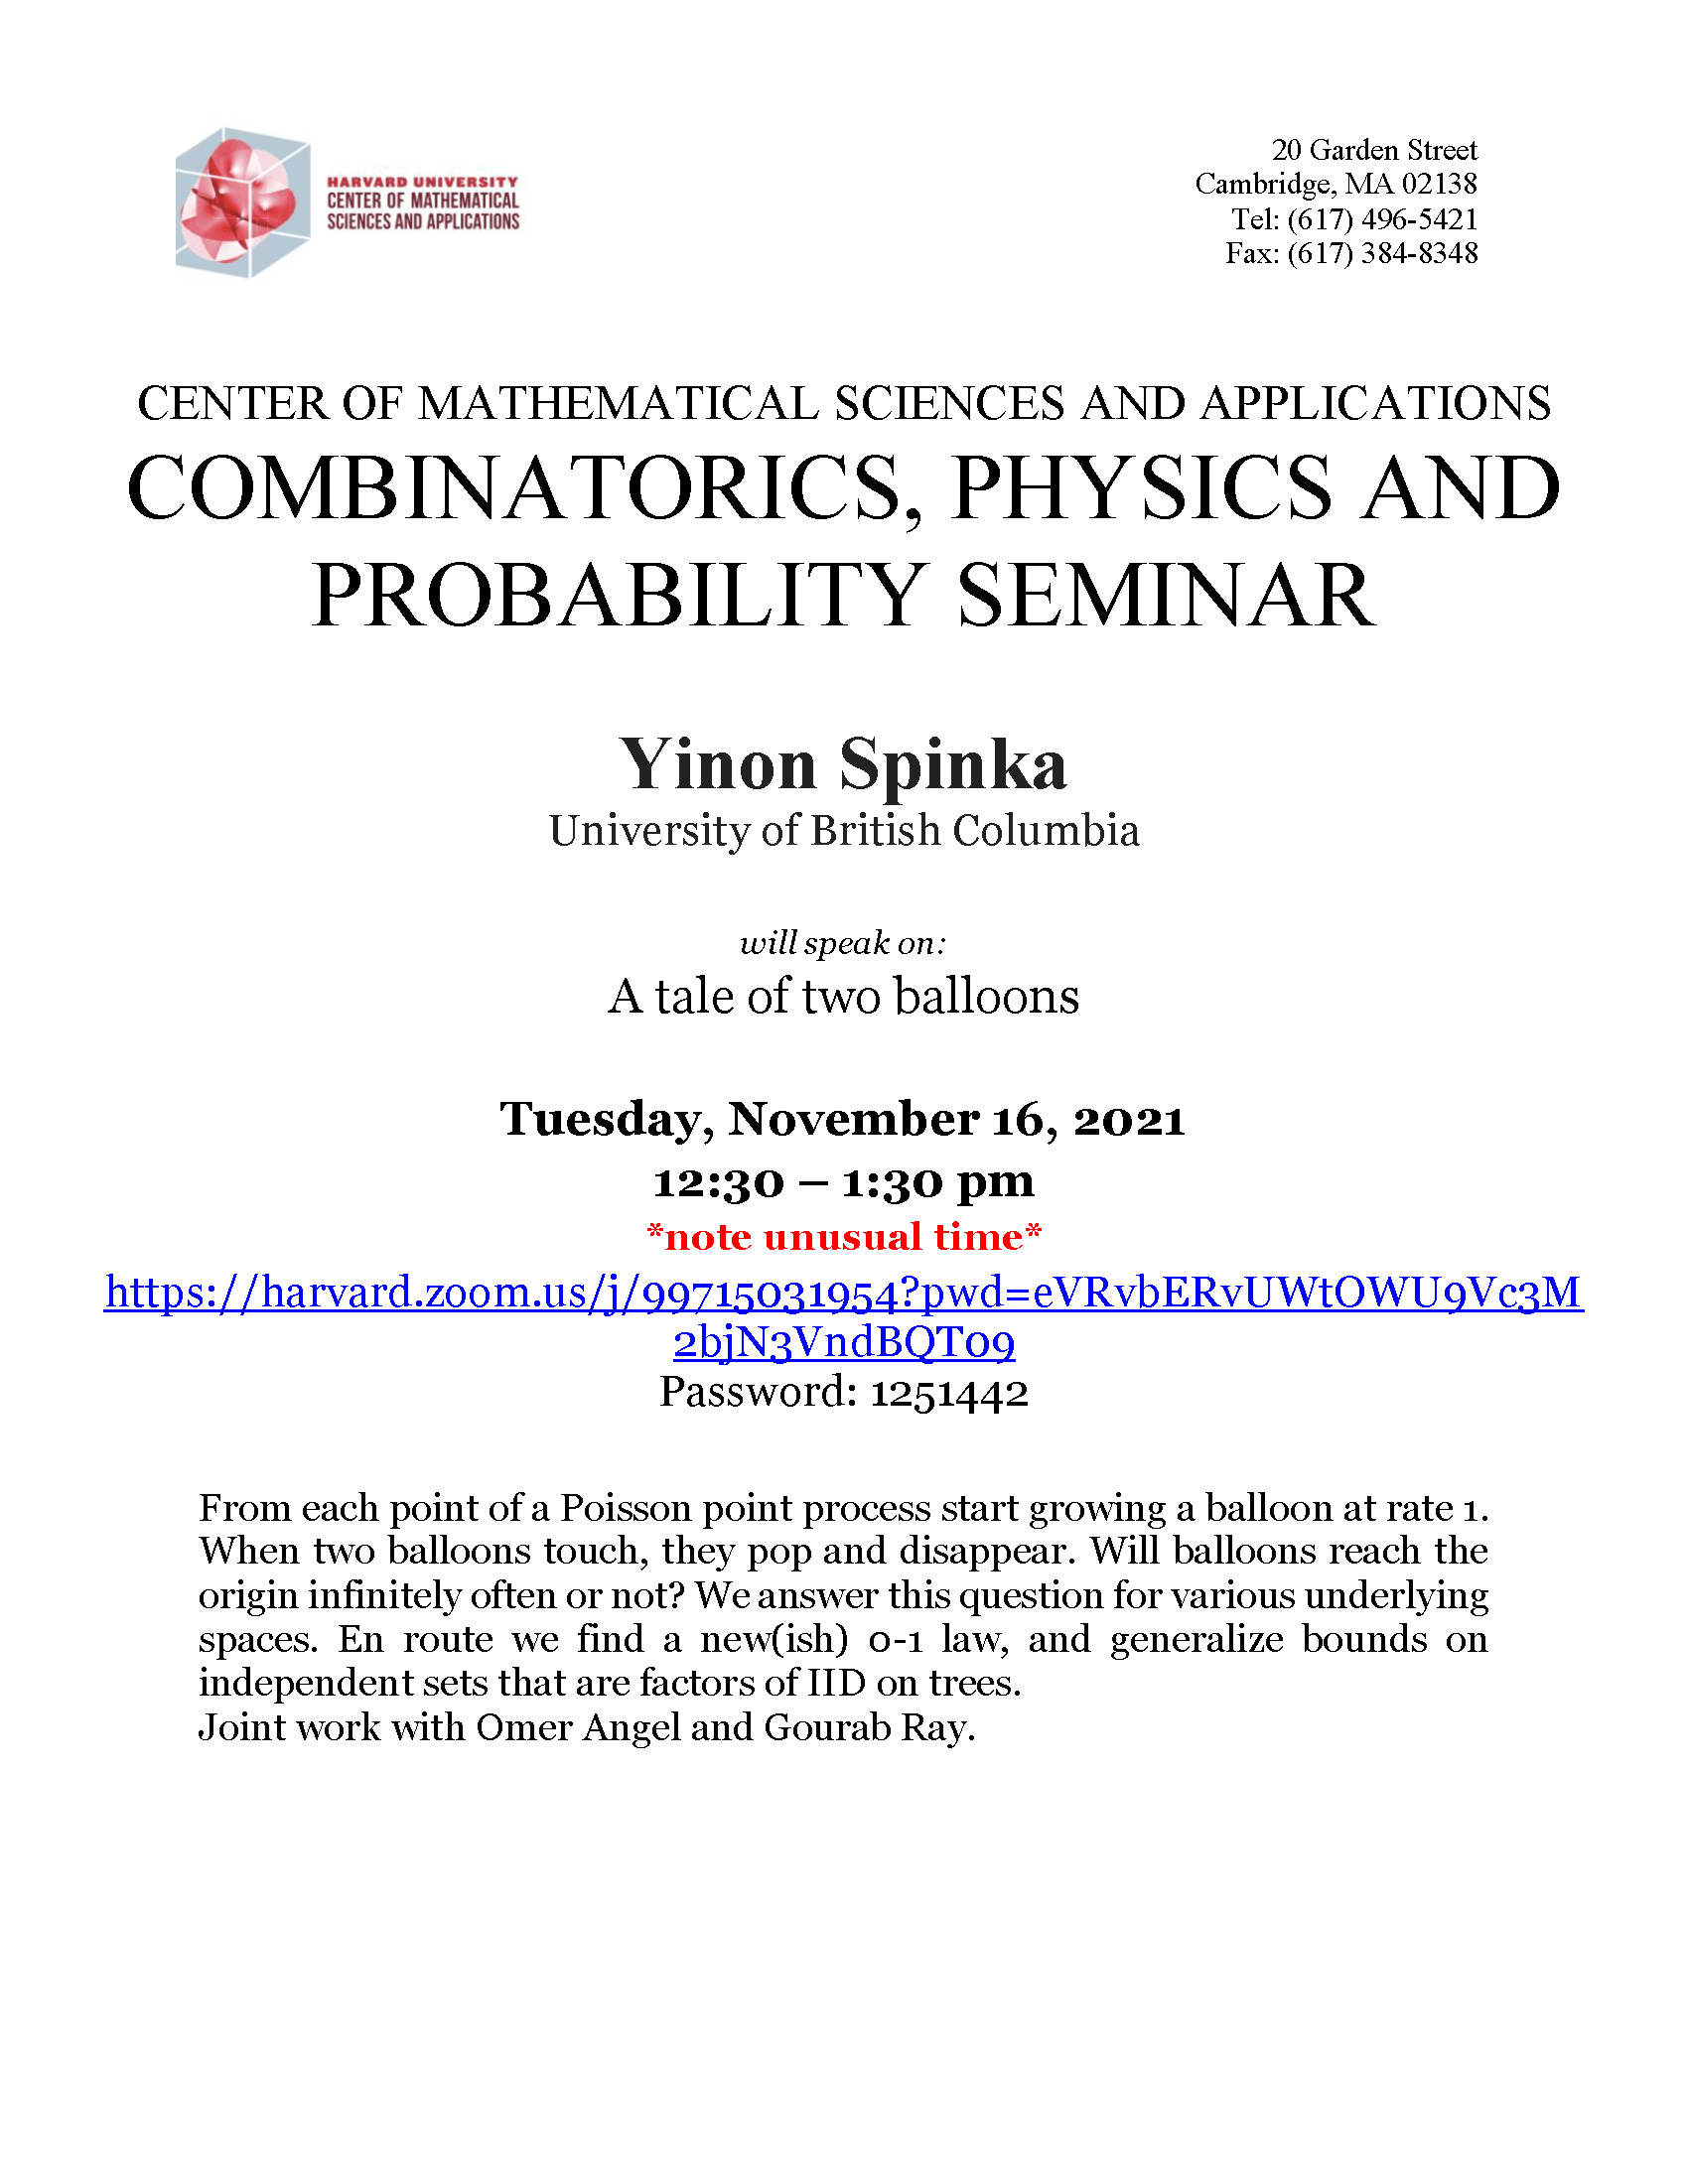 CMSA-Combinatorics-Physics-and-Probability-Seminar-11.16.21